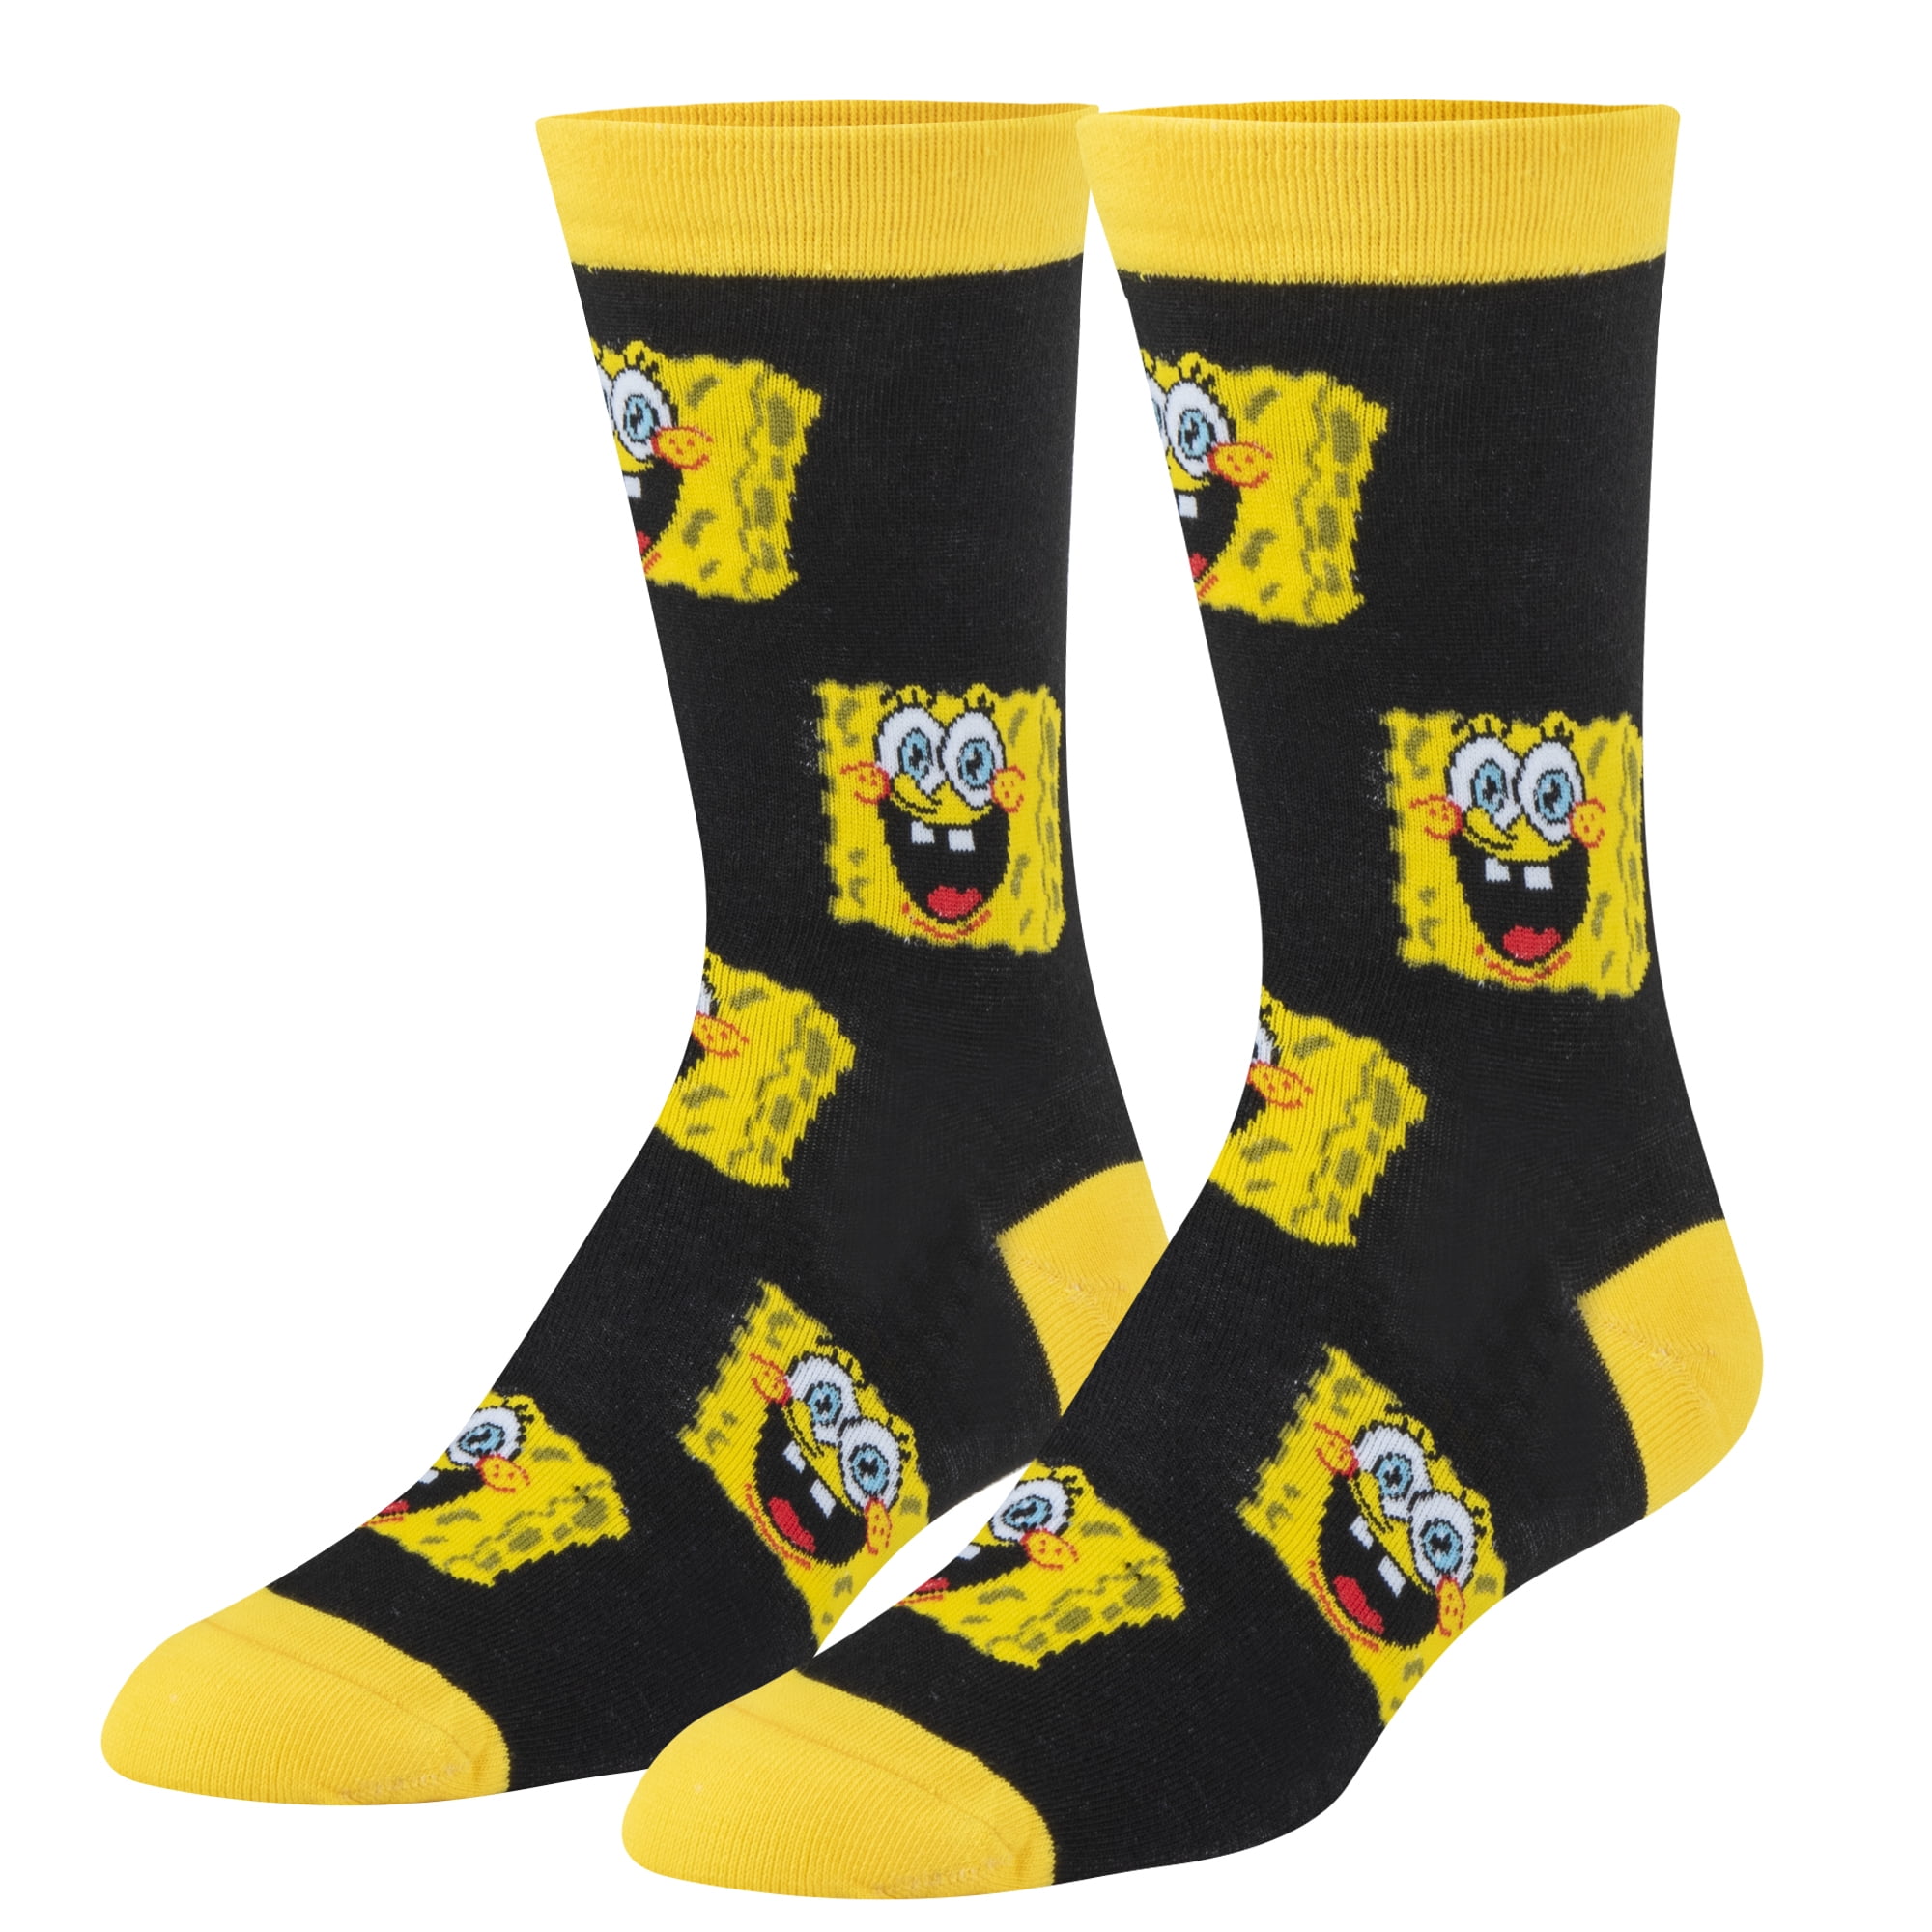 SpongeBob SquarePants Face Glow-In-The-Dark Crew Socks